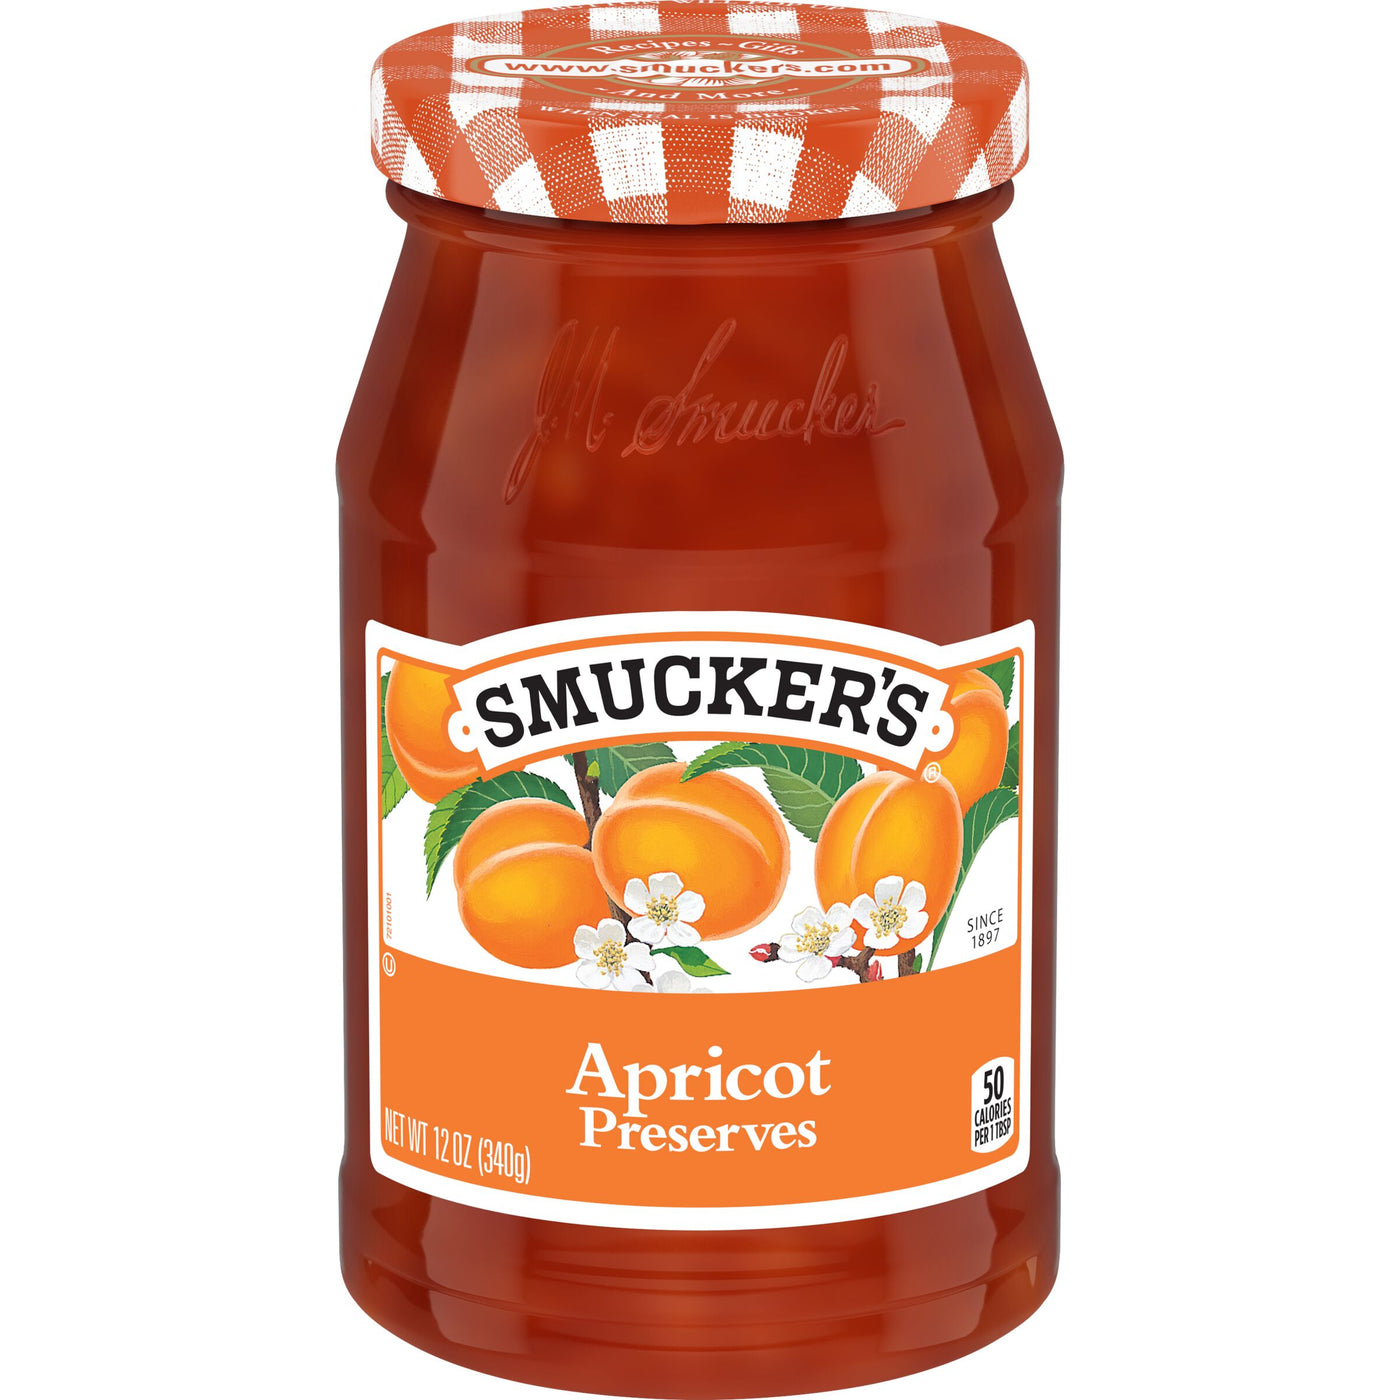 Smucker's Apricot Preserves